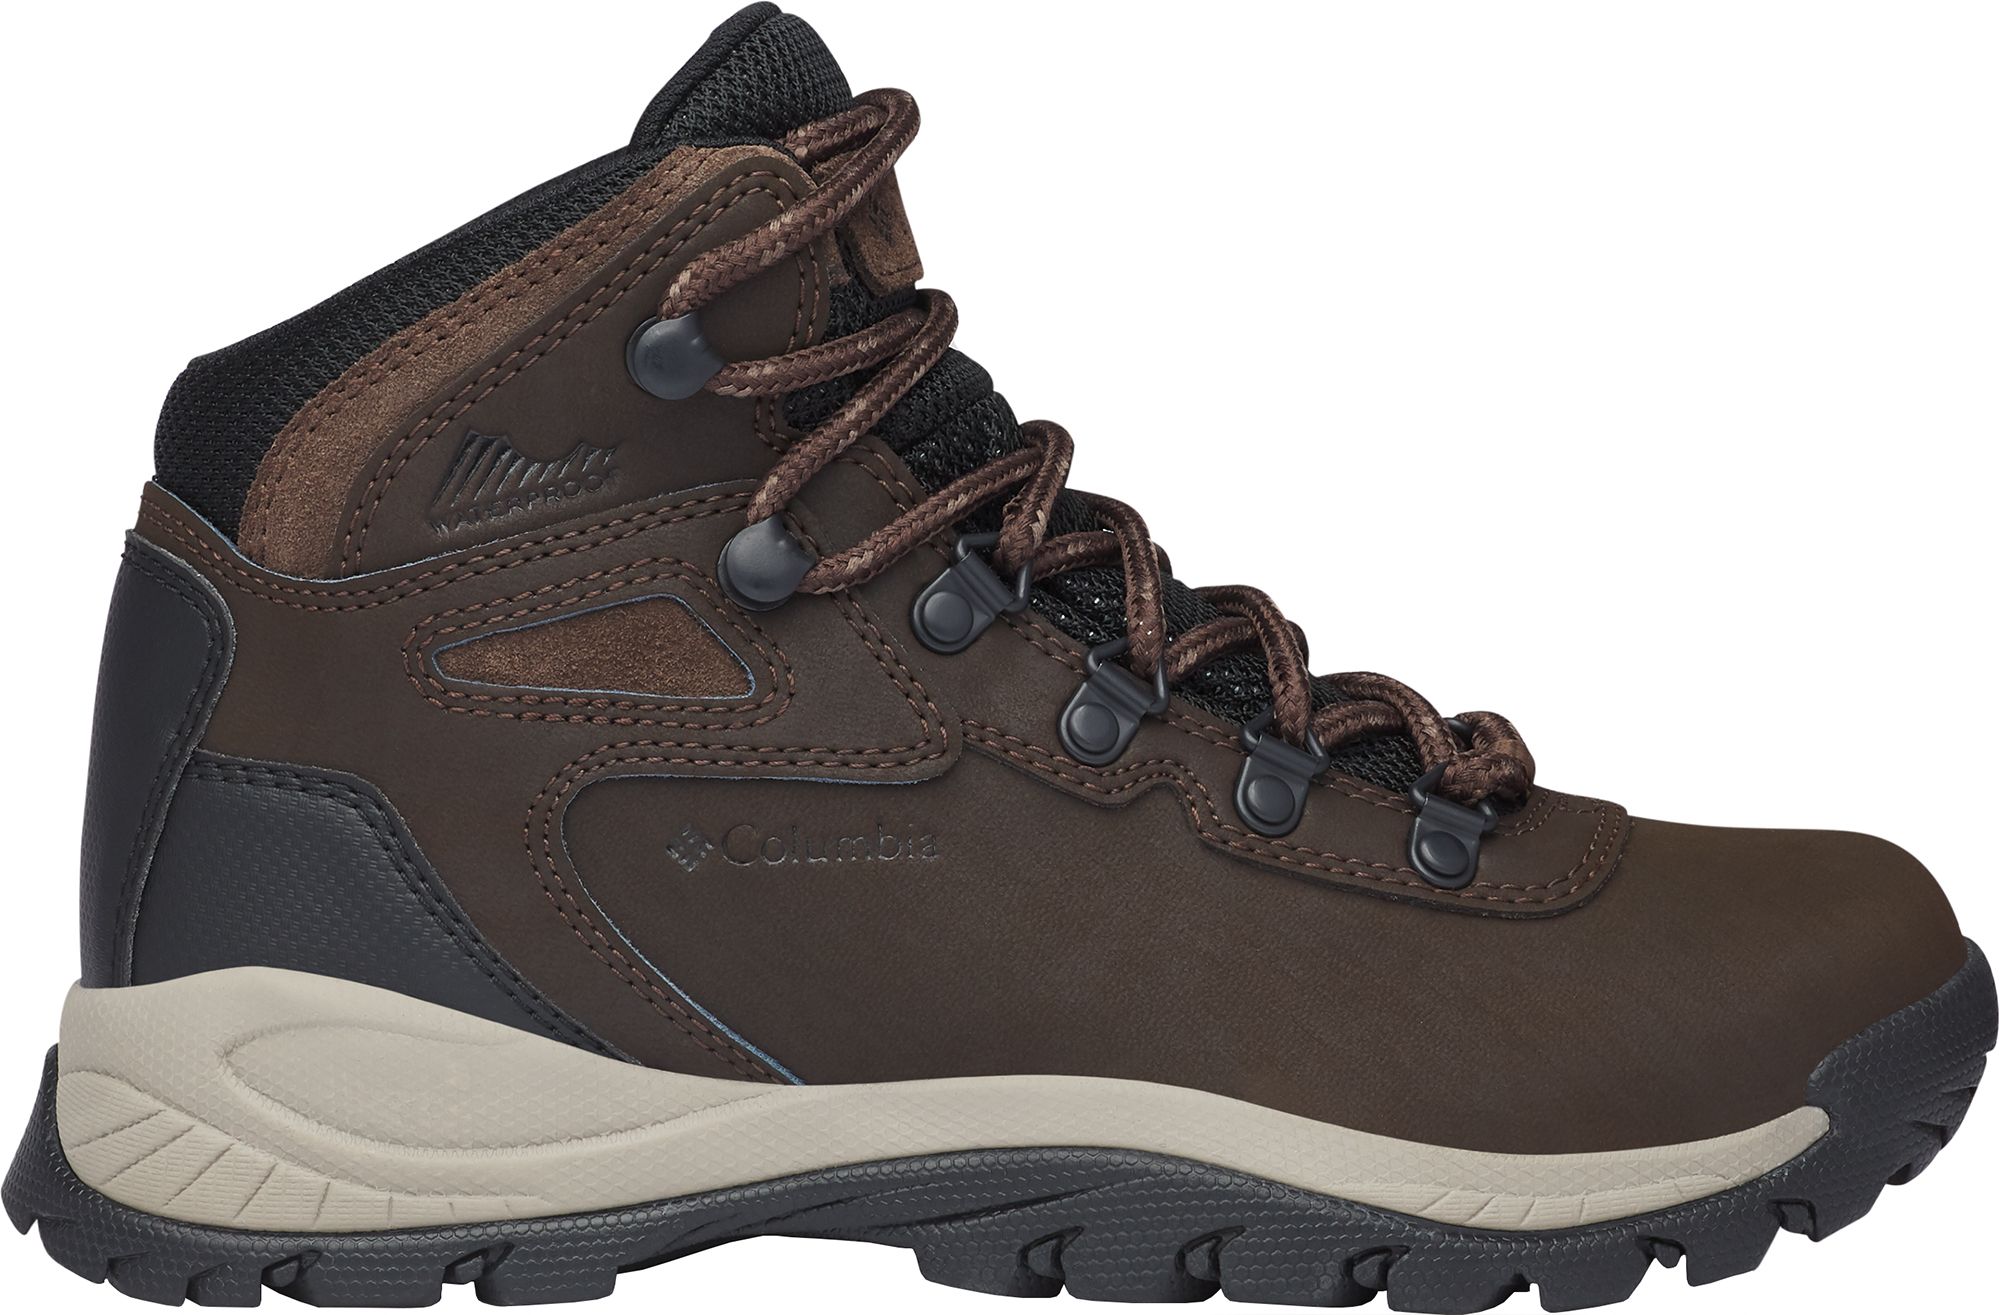 Photos - Trekking Shoes Columbia Women's Newton Ridge Plus Mid Waterproof Hiking Boots, Size 9, Co 